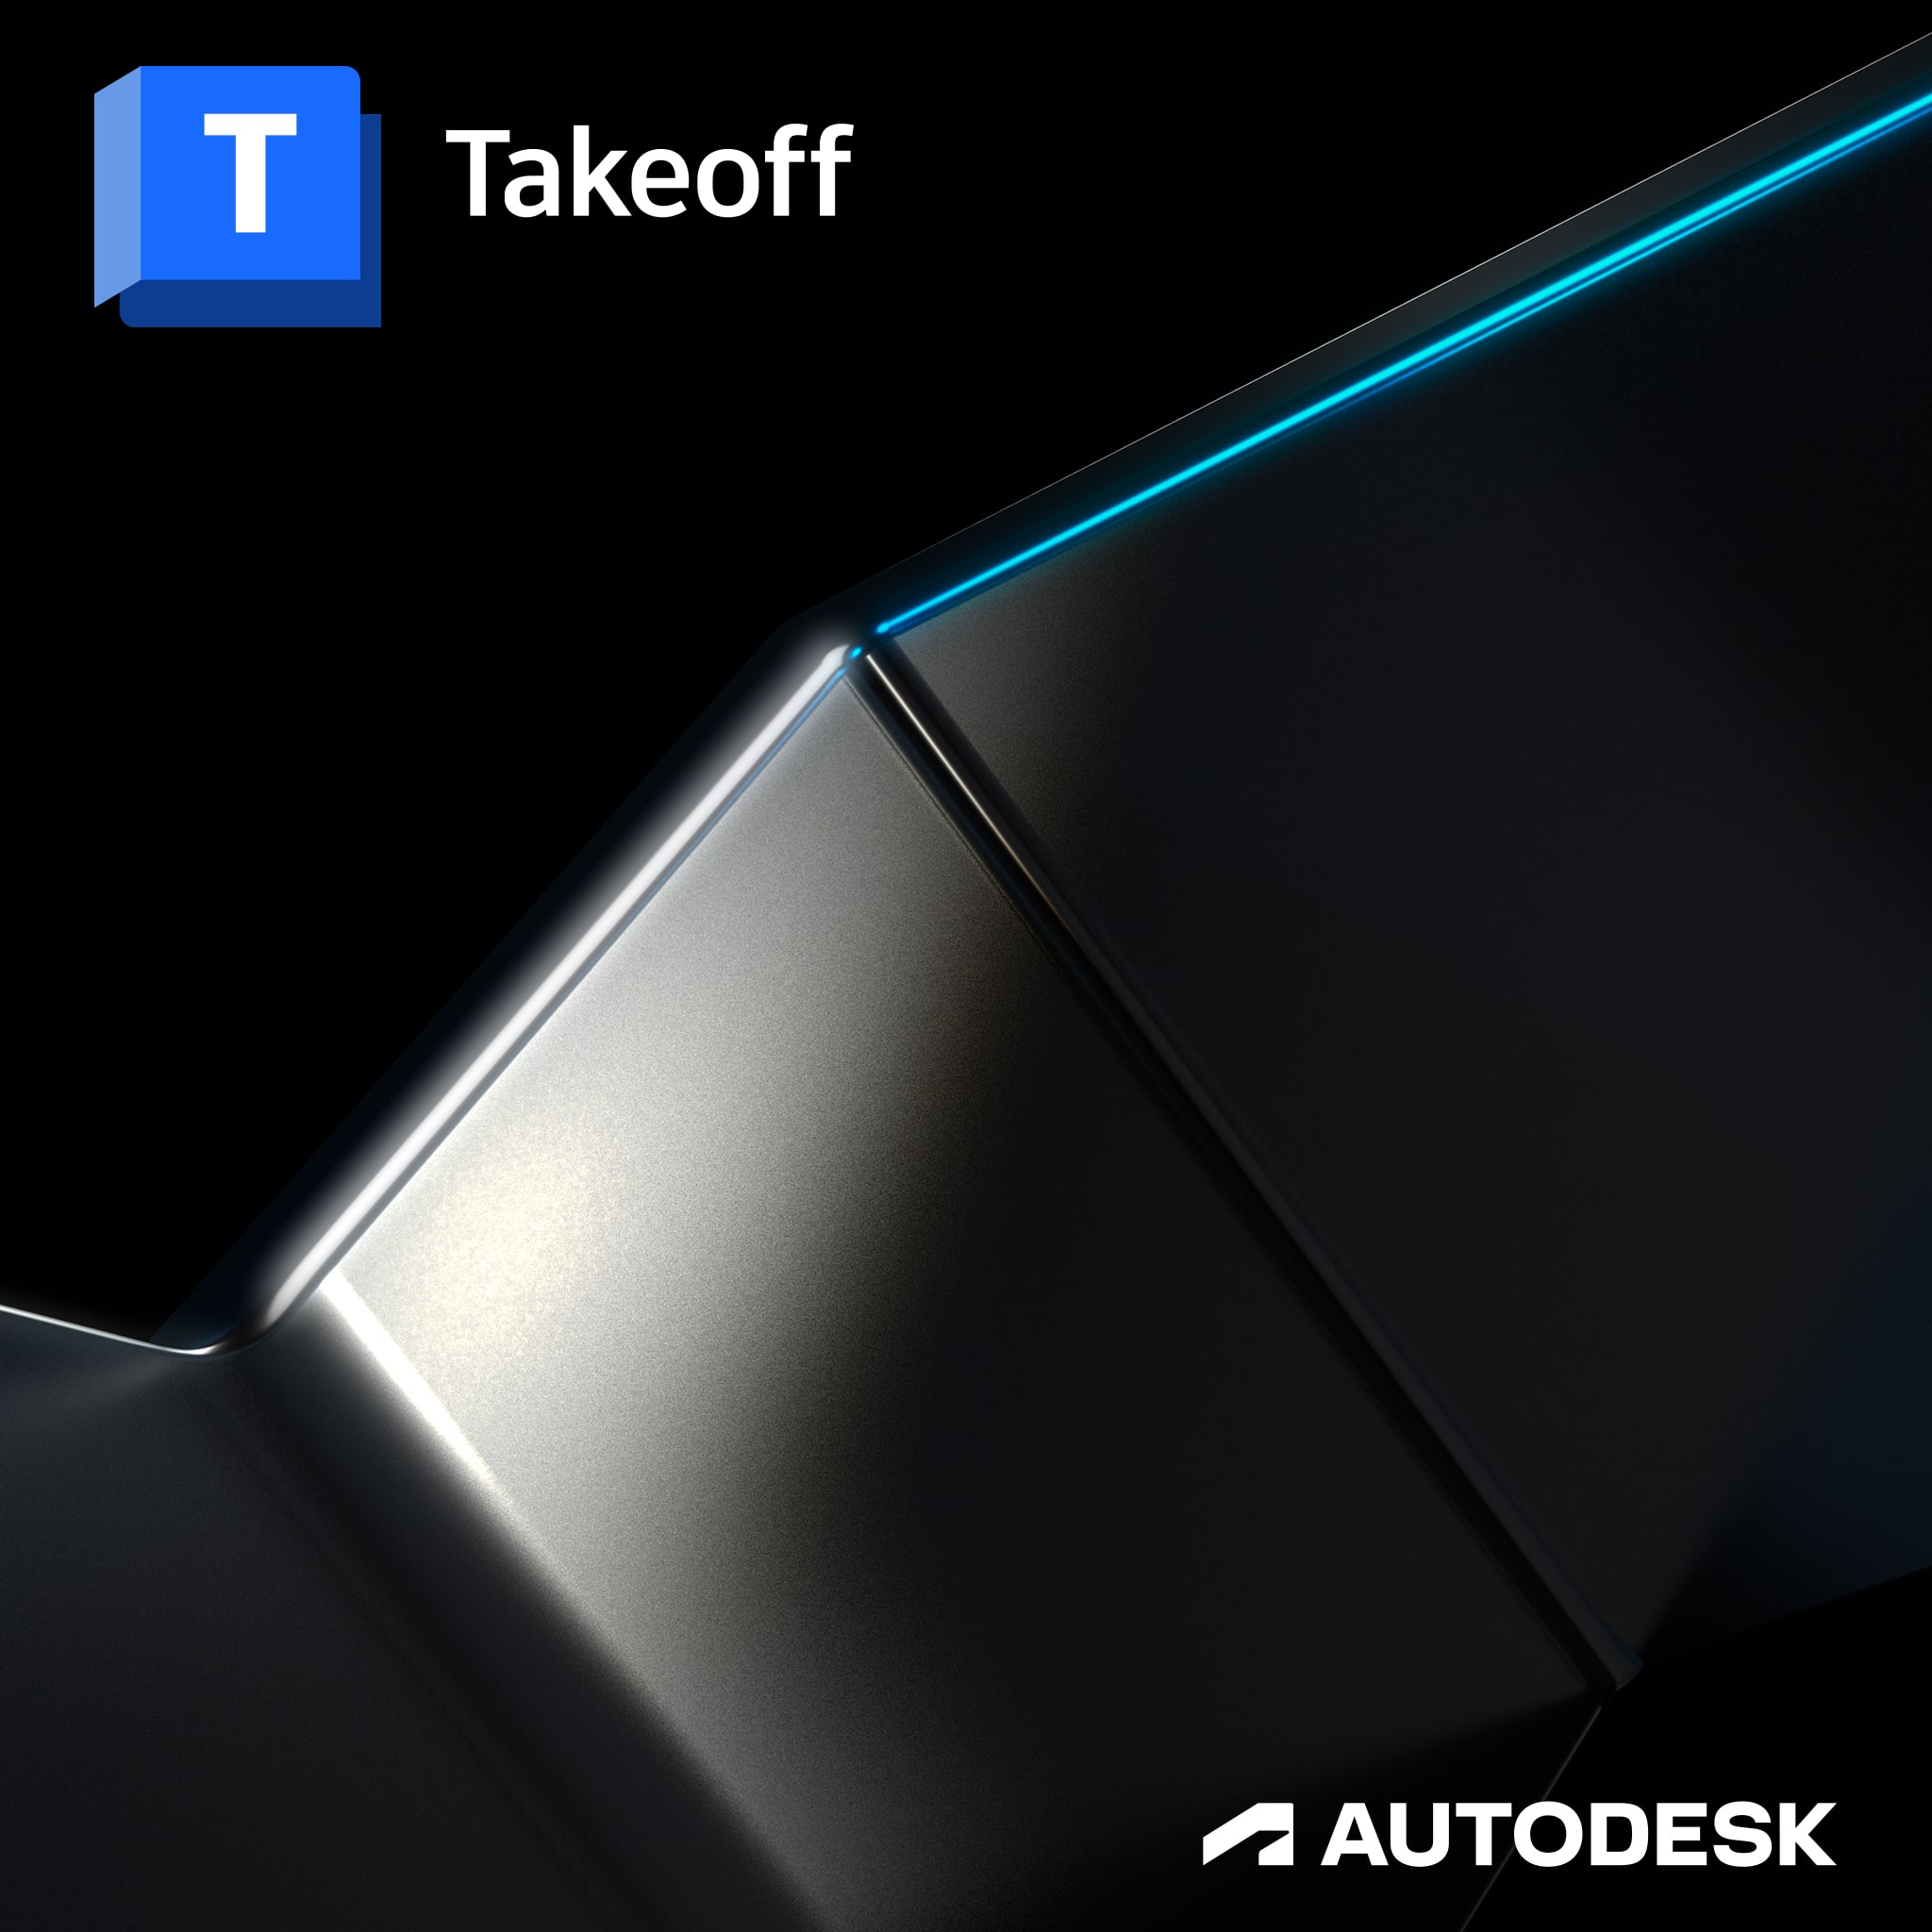 ADESK TakeOff badge